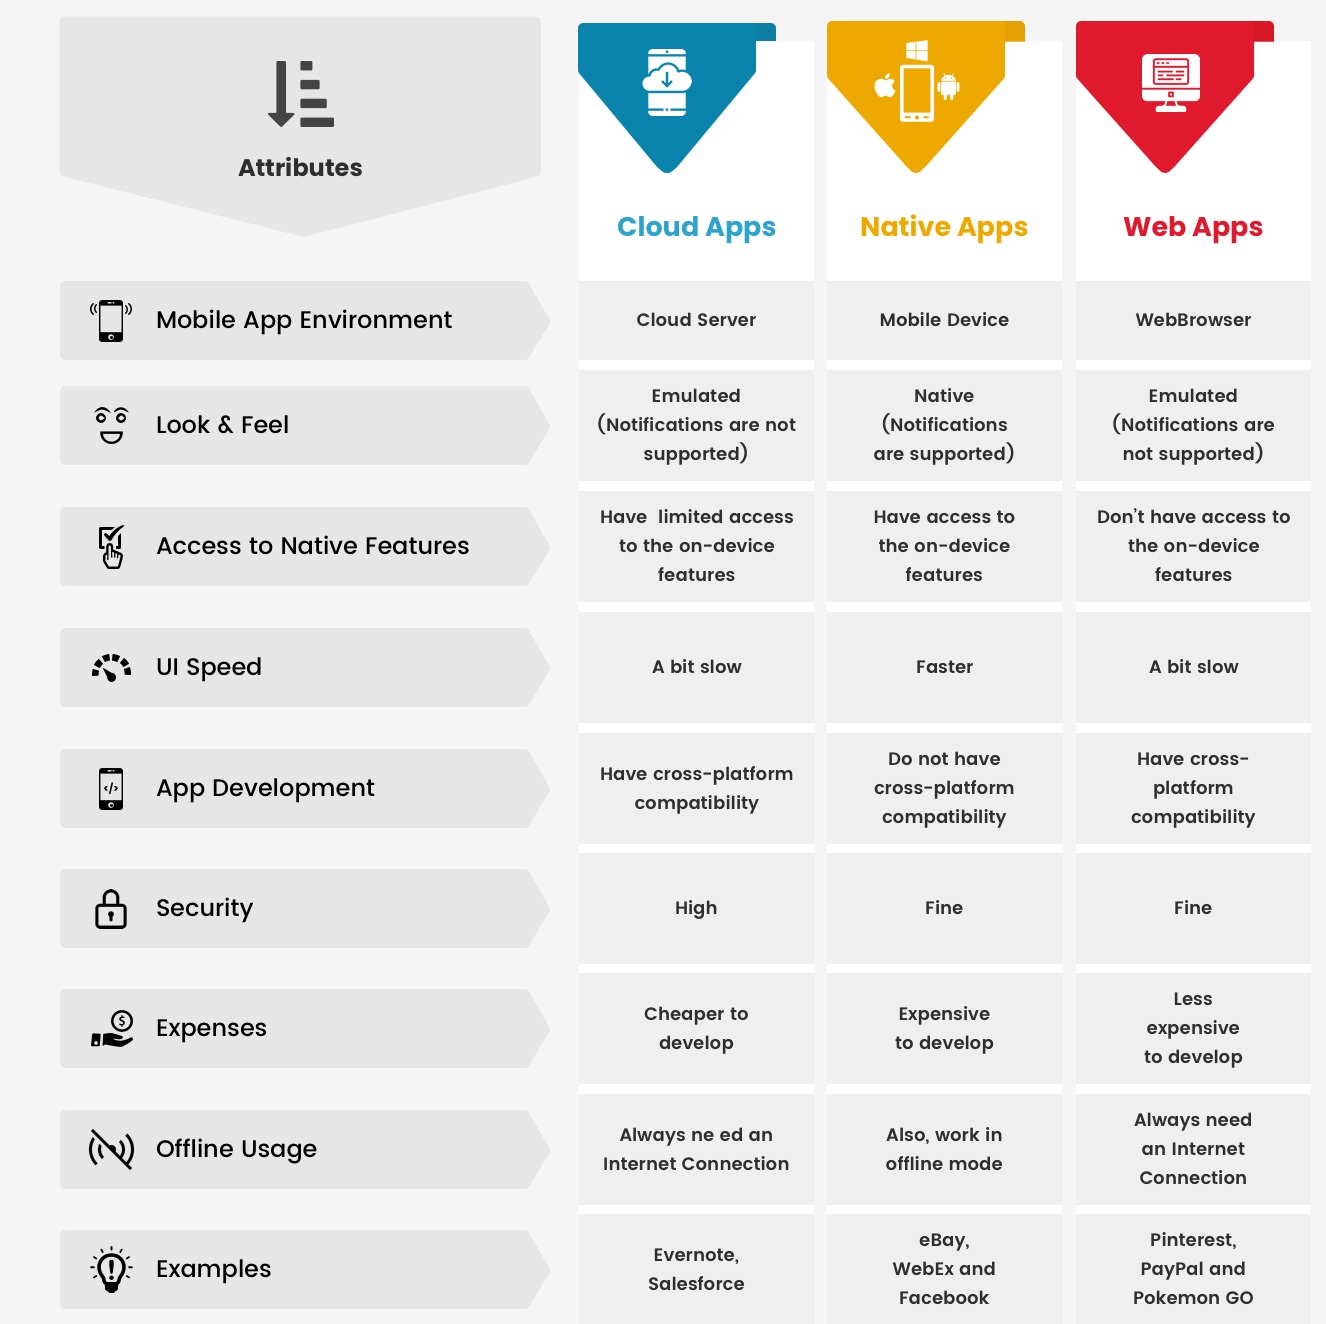 Cloud Apps vs Mobile Apps vs Web Apps